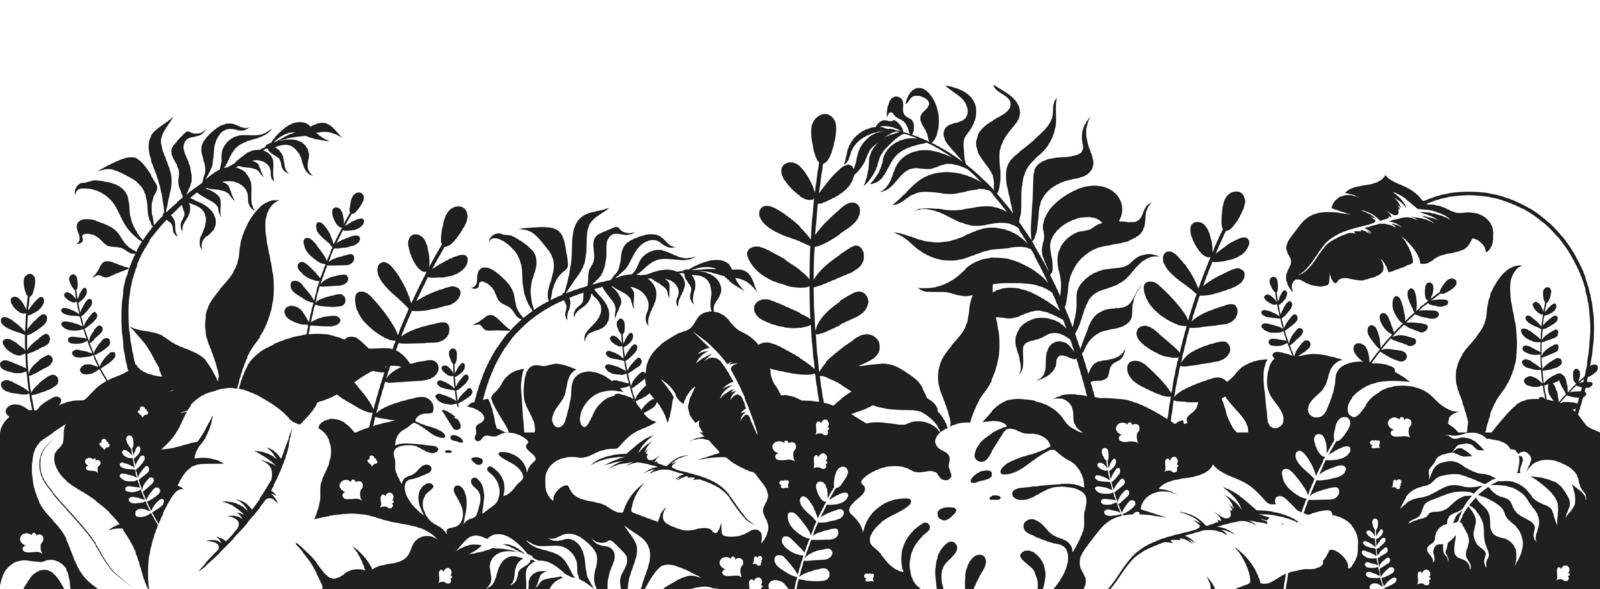 Tropical foliage black silhouette vector illustration. Wild vegetation. Botanical and herbal decoration. Shrubs and bushes. Exotic monochrome landscape. Subtropical leaves 2d cartoon shape by ntl